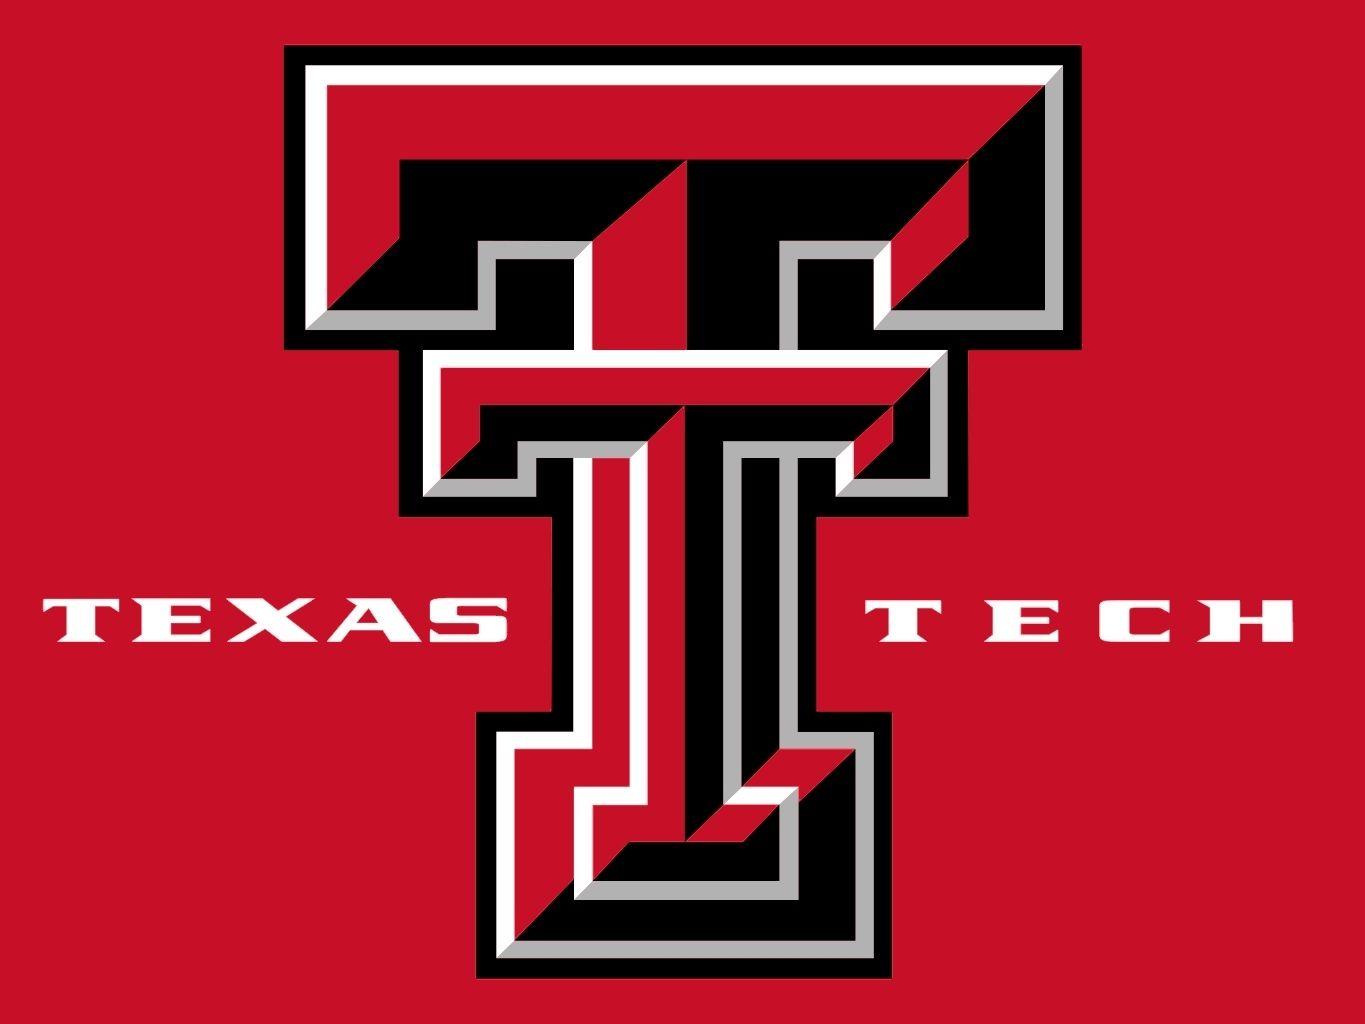 Texas Tech Red Raiders Logo - Texas Tech Red Raiders | NCAA Football Wiki | FANDOM powered by Wikia